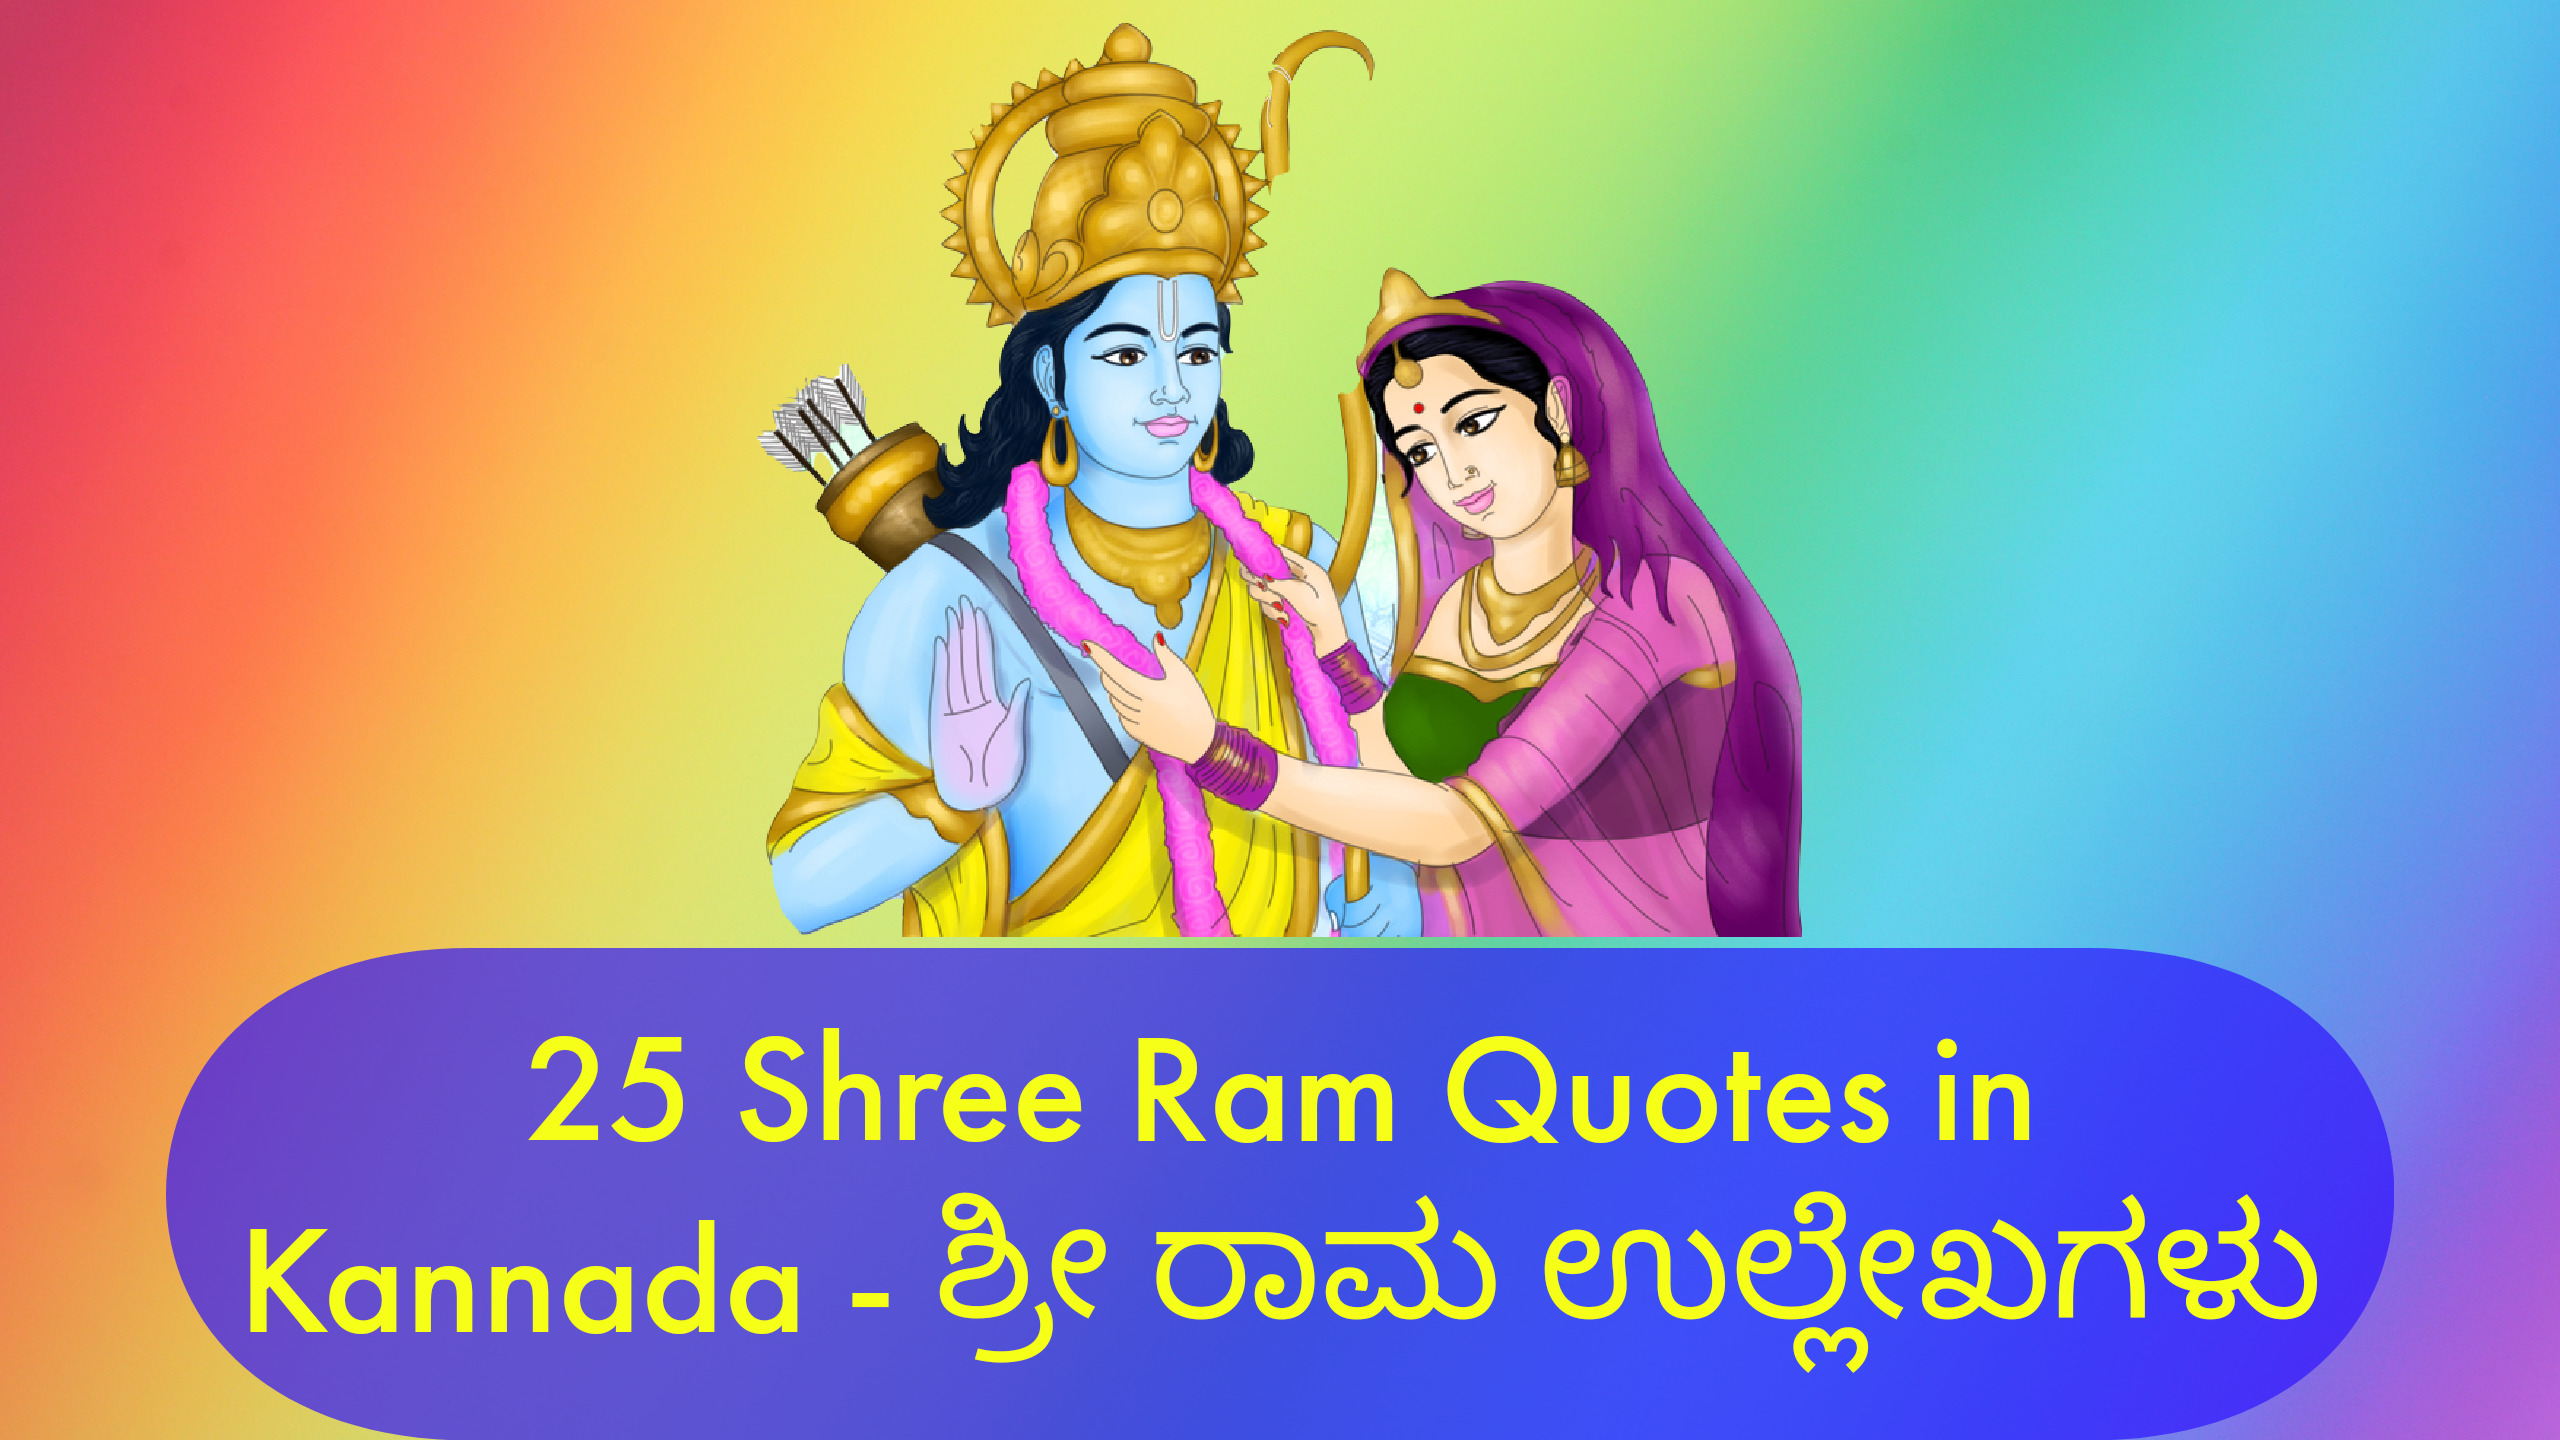 Shree Ram Quotes in Kannada